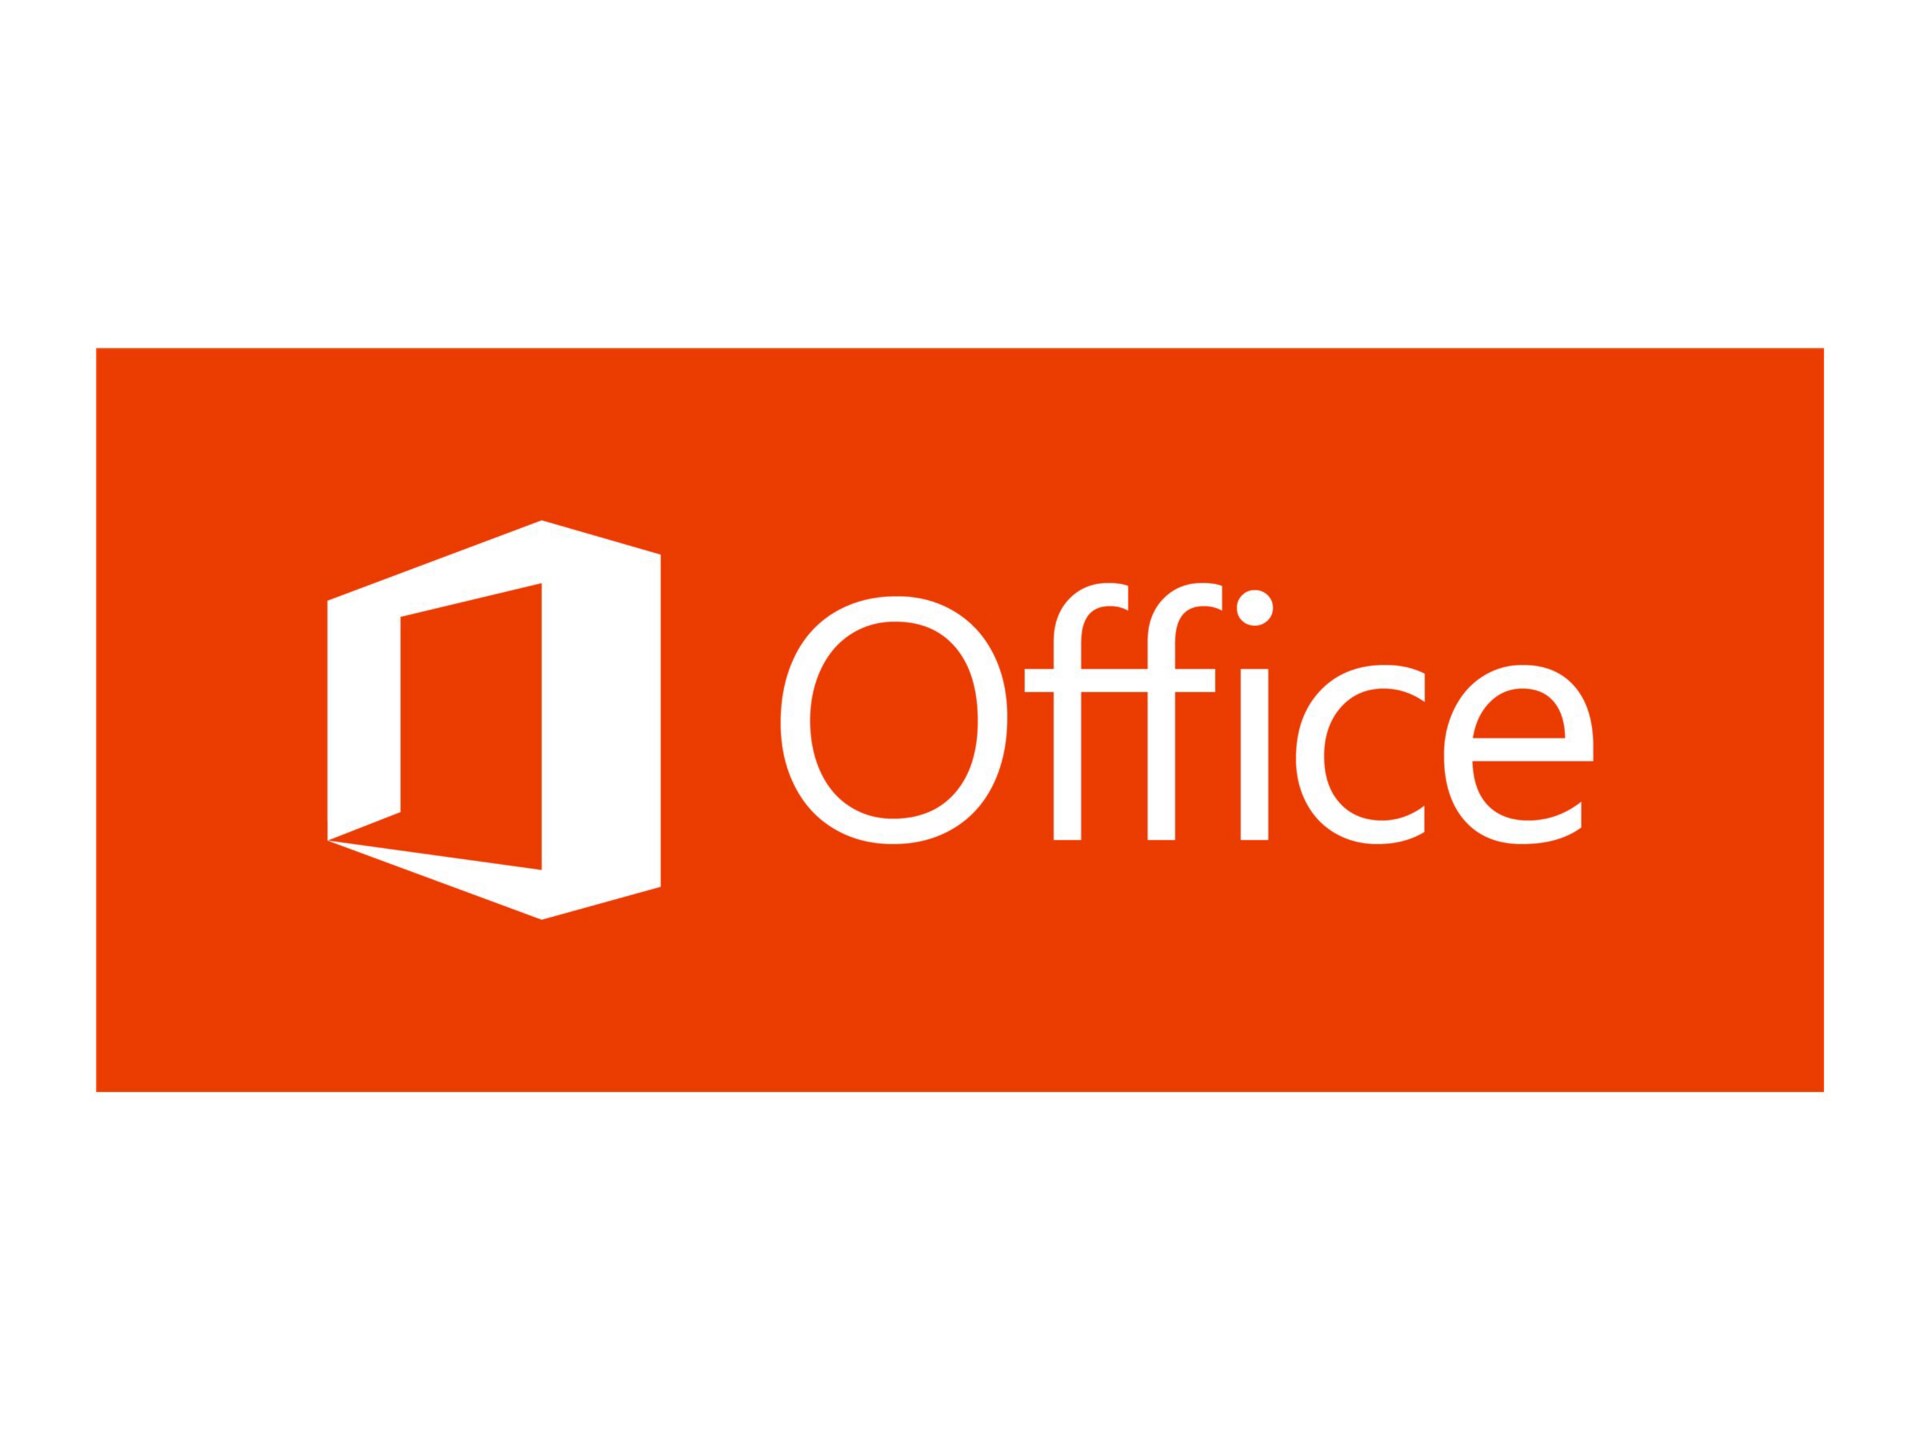 Microsoft Office for Mac Standard 2016 - license - 1 license